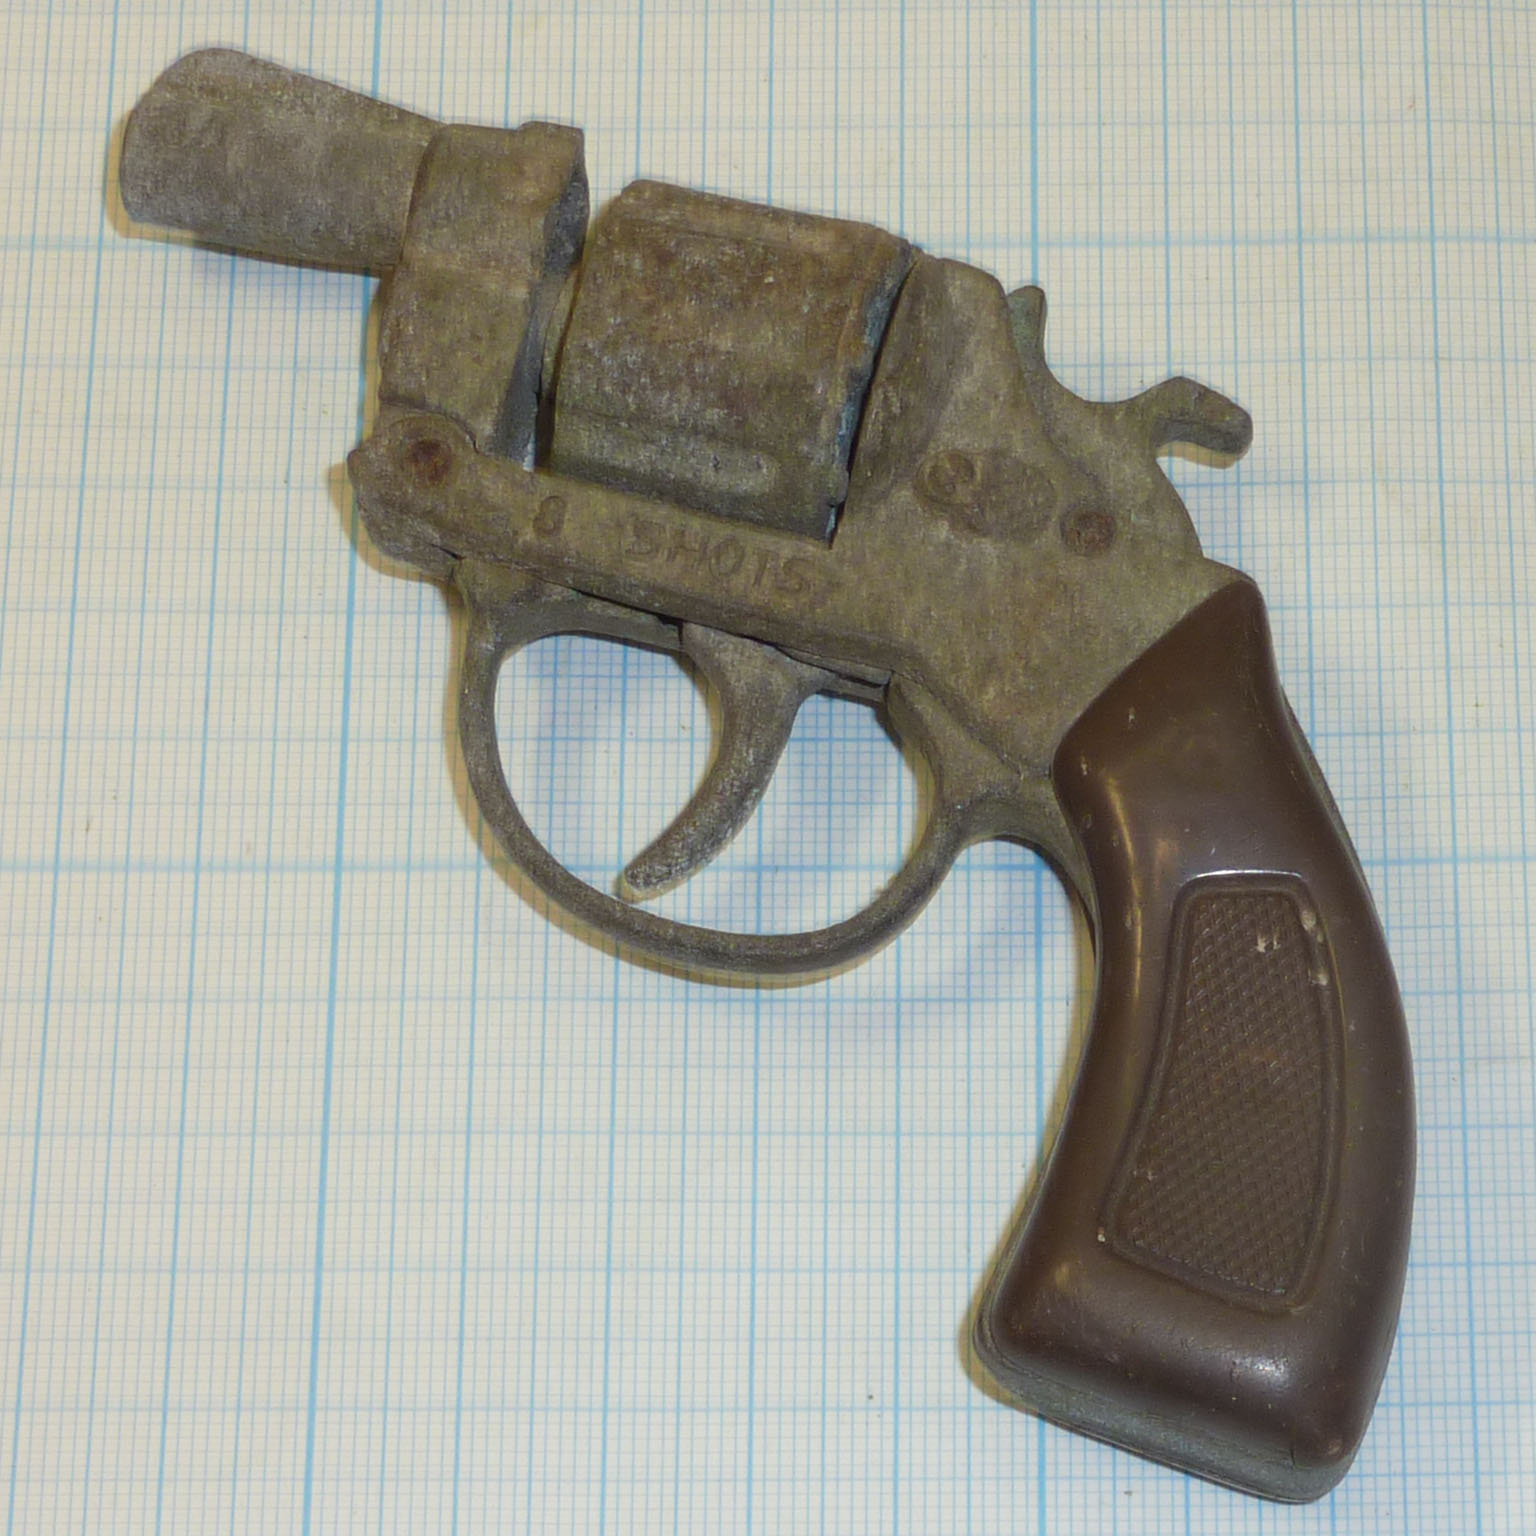 Toy revolver rust фото 84